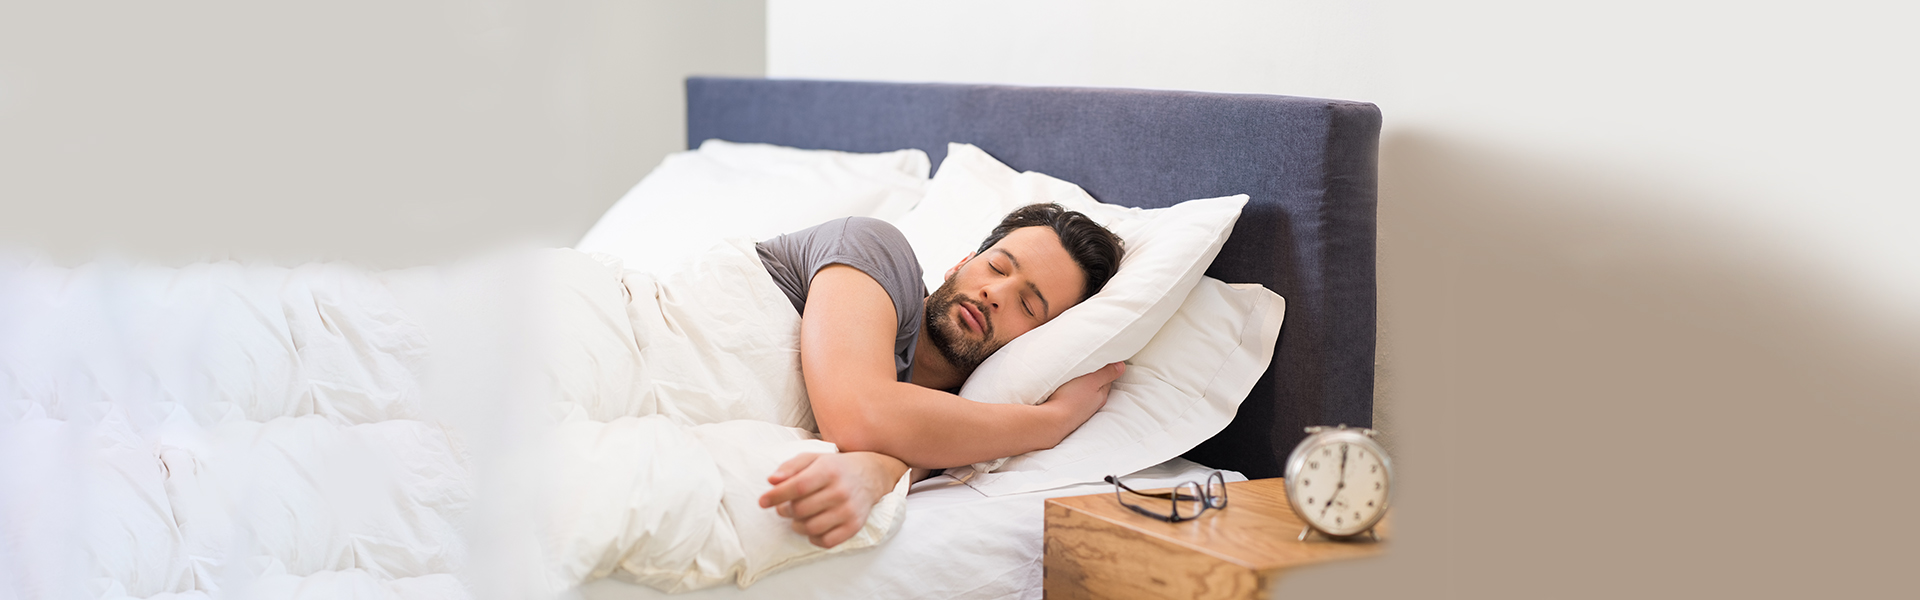 Somnomed Oral Appliance for Sleep Apnea: Is It Effective?